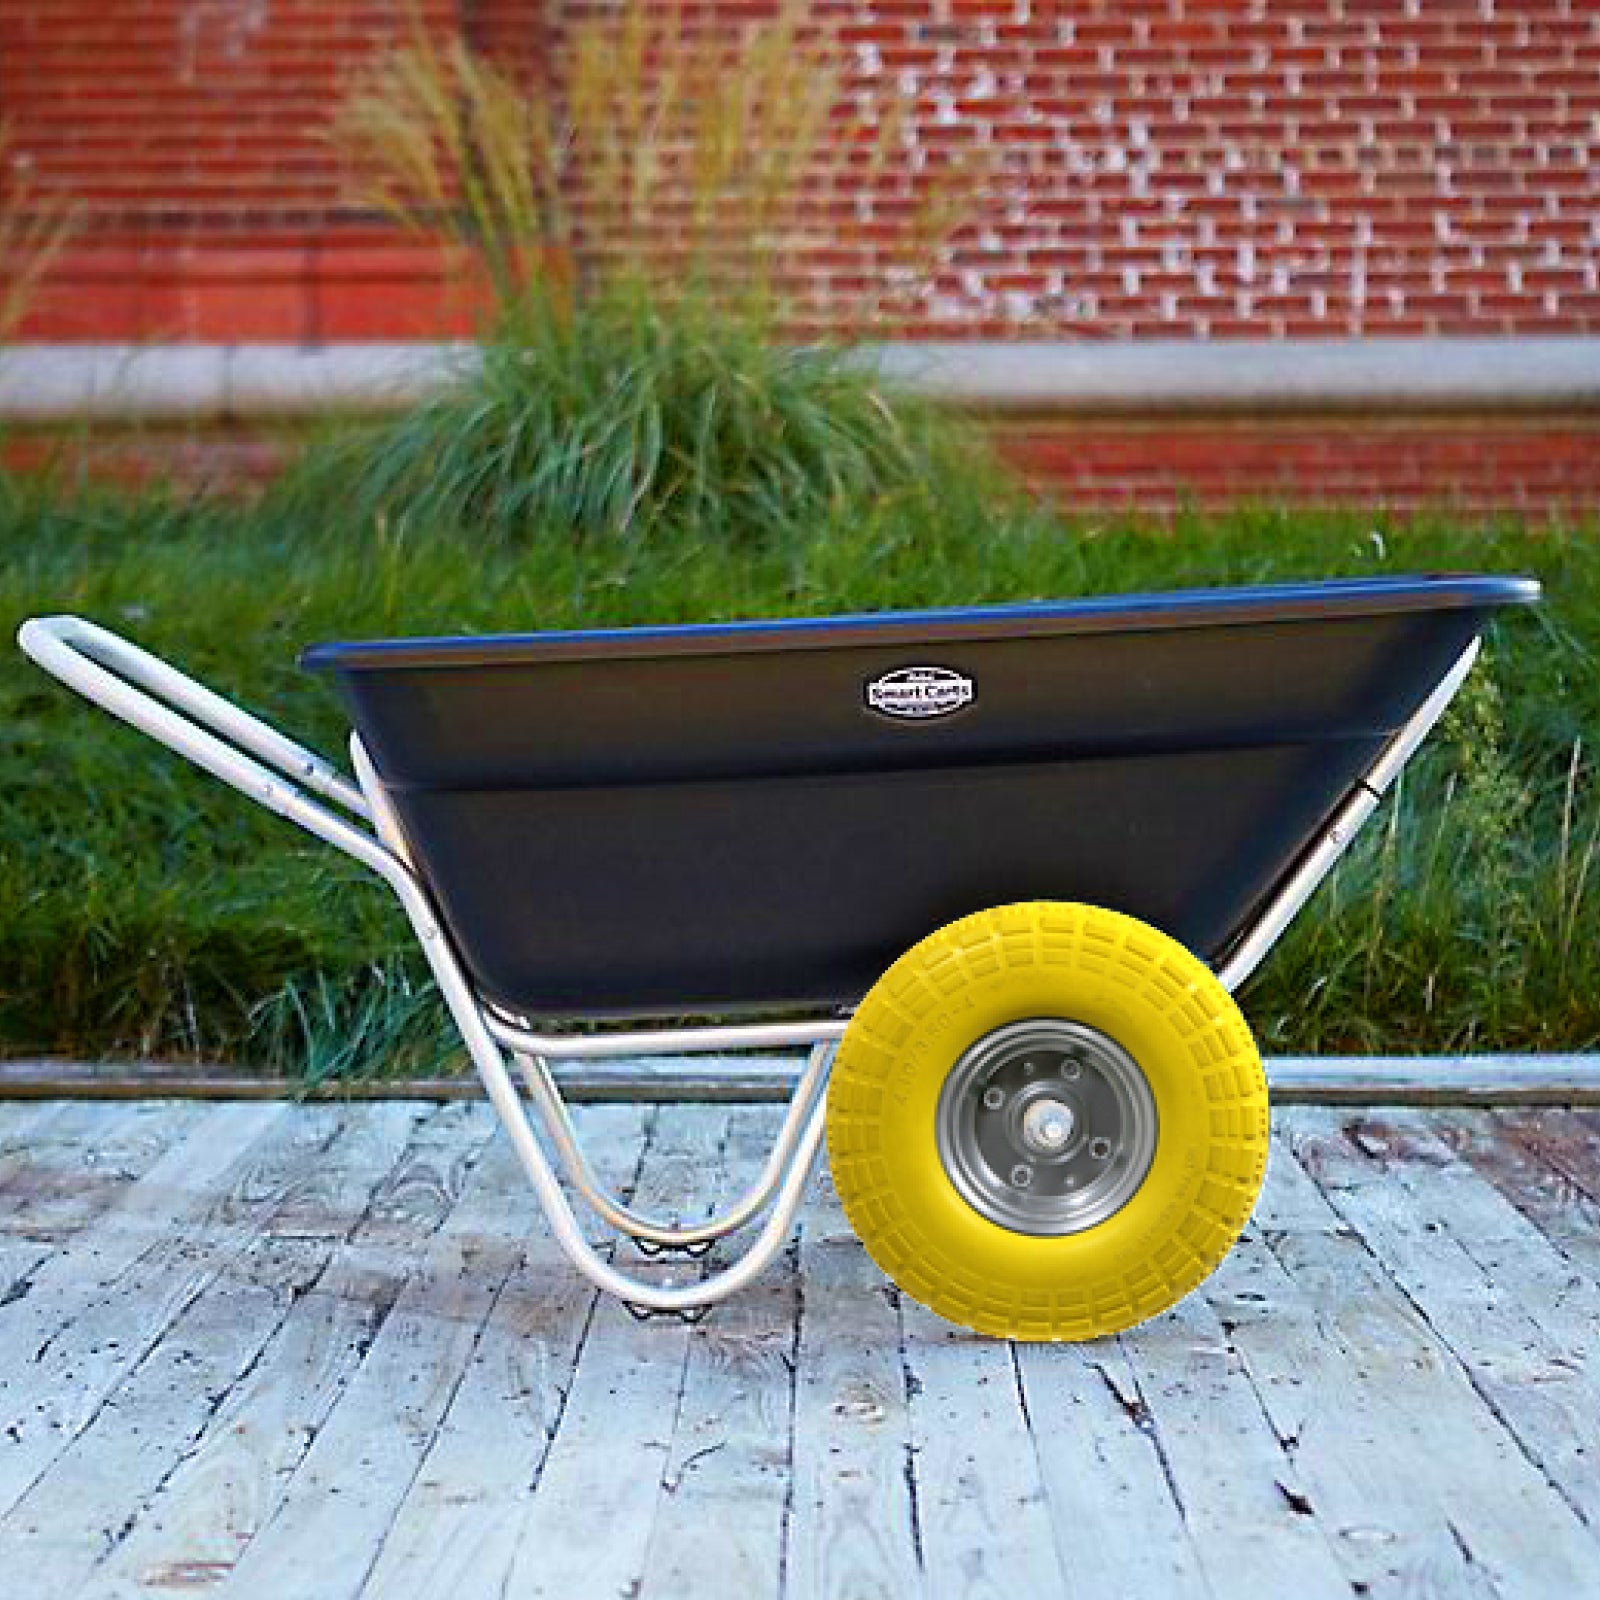 10" Solid Wheelbarrow Wheel Tubeless Barrow Tyre Burst & Puncture Proof Spare x 3